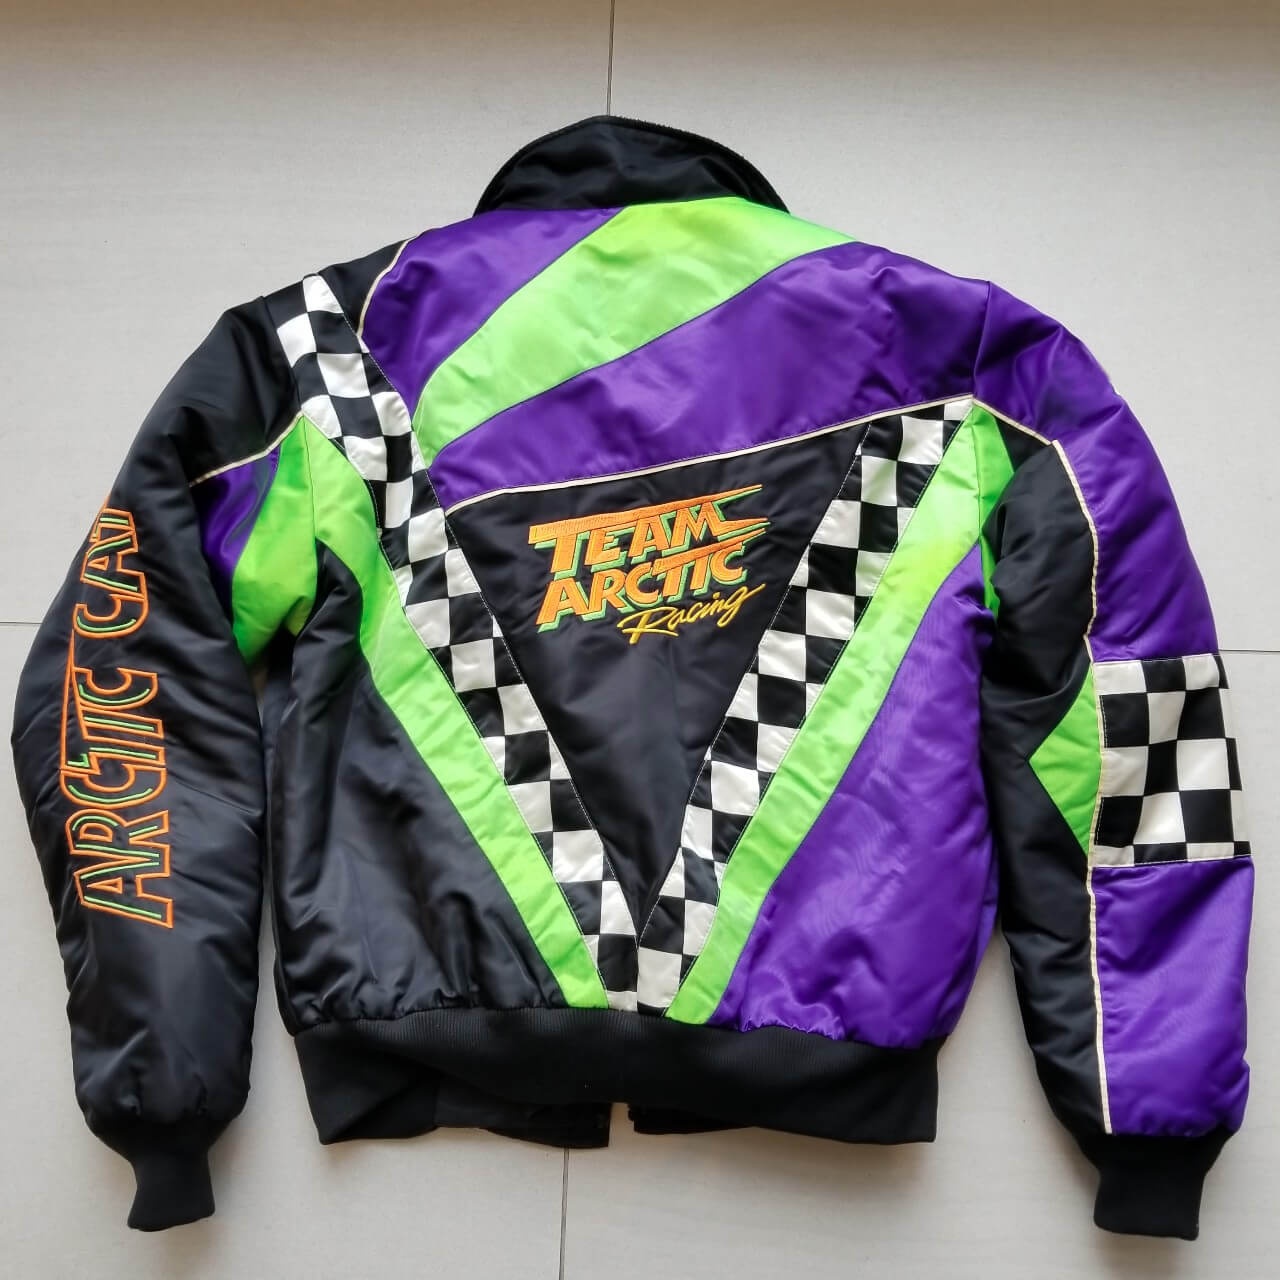 Vintage 90s Team Arctic Racing Jacket - Maker of Jacket